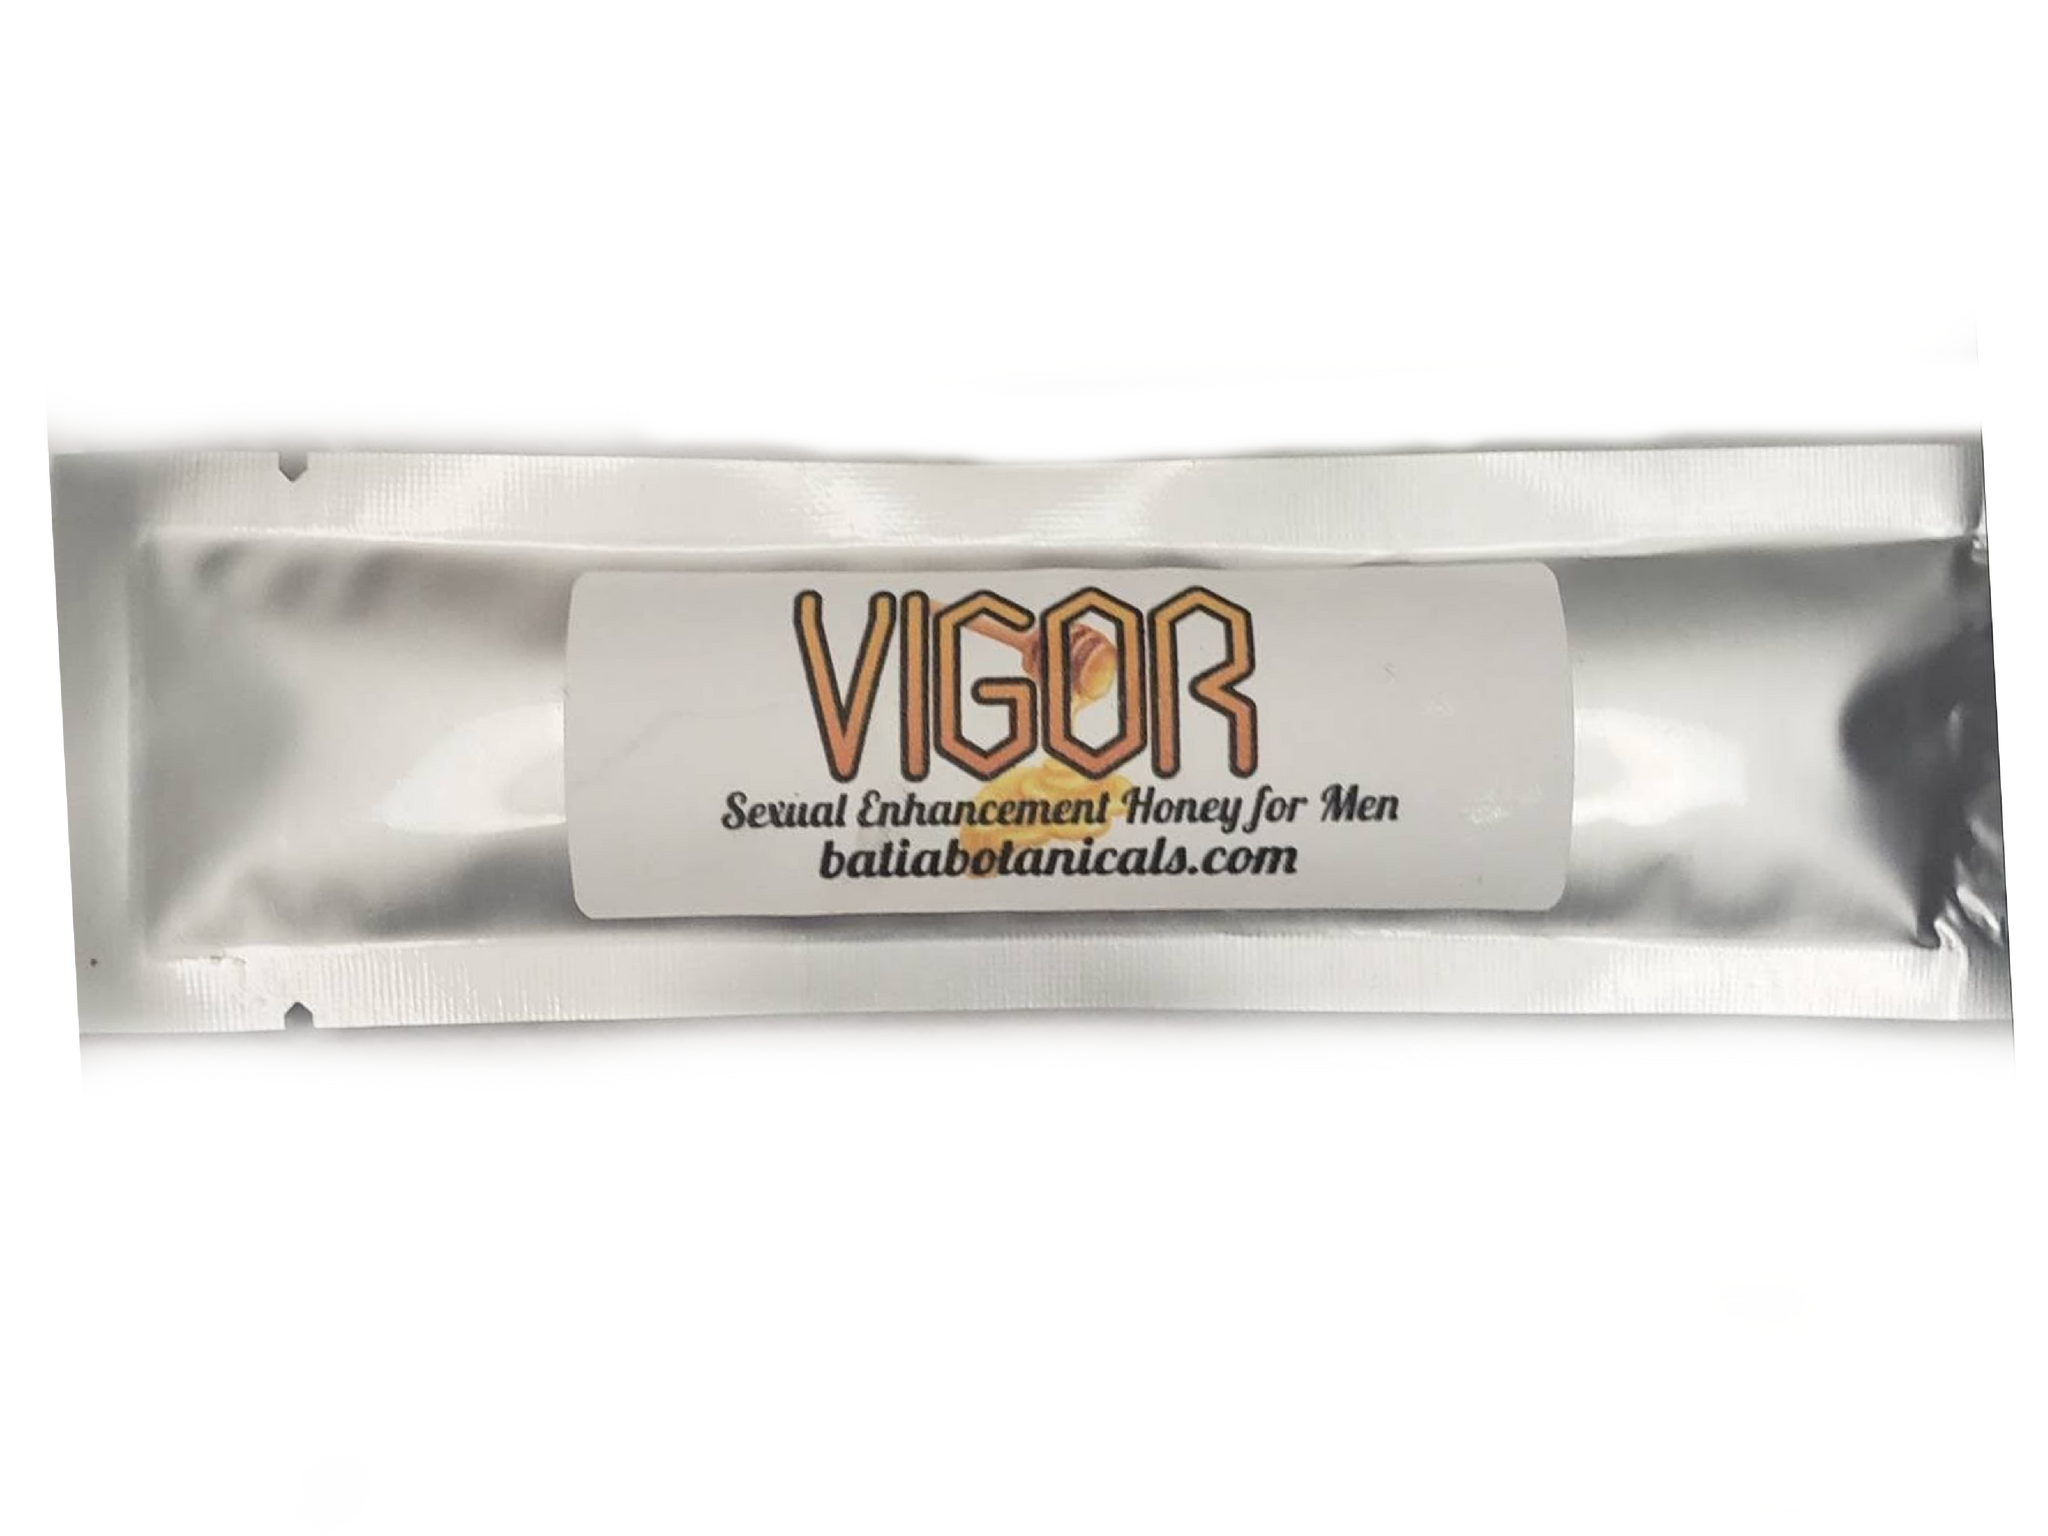 Vigor, LLC